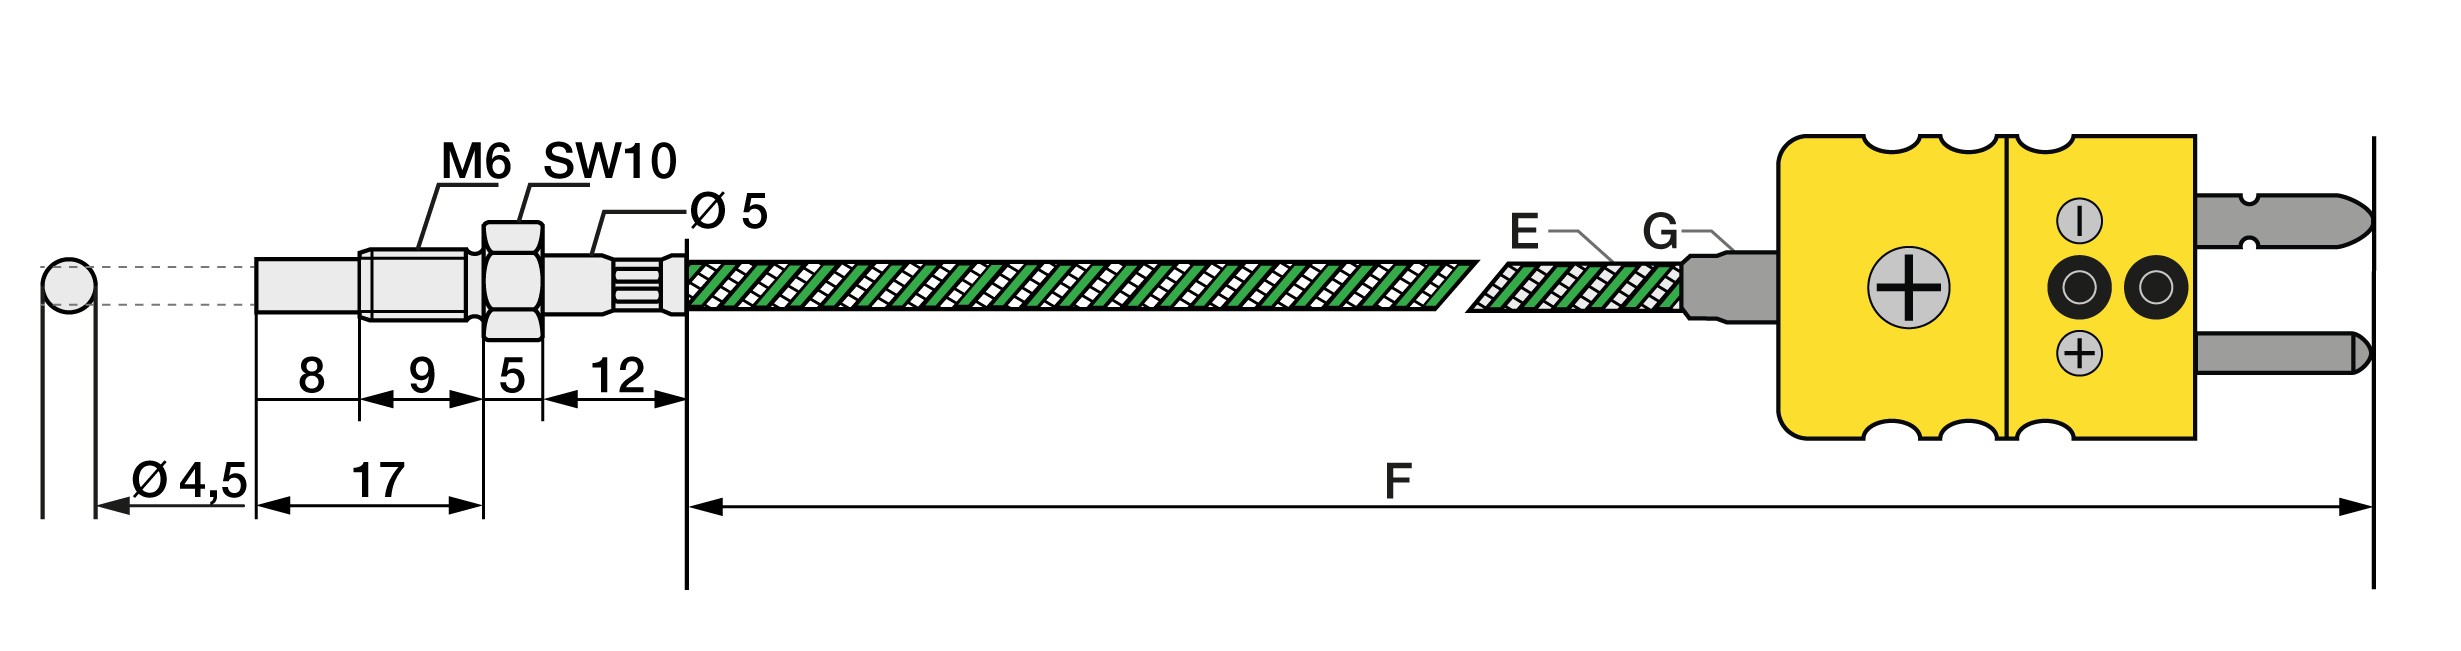 Temperatursensor Kabel, M6 BSW Gewinde Temperaturmessfühler Typ K  Thermoelementsensor mit 1-5 Meter Kabel Temperaturfühler(2M)